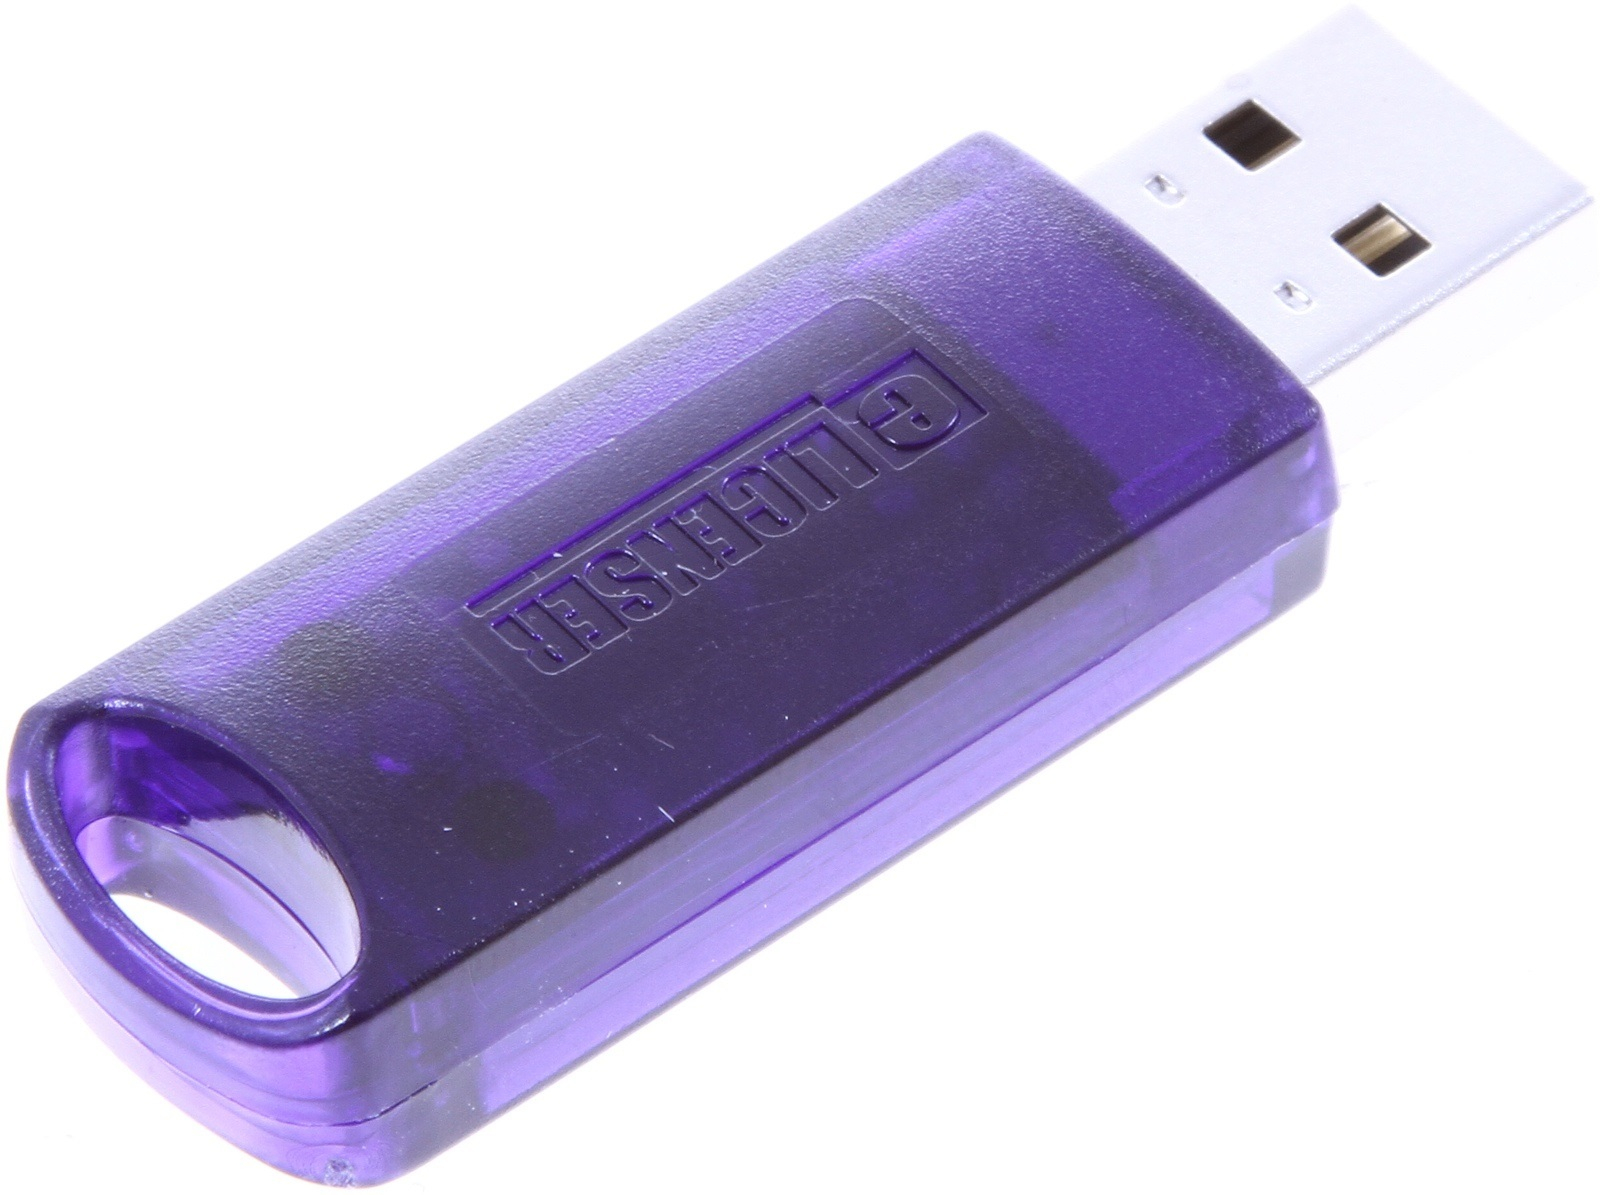 Steinberg abandonará por completo el sistema de dongle USB eLicenser |  Hispasonic